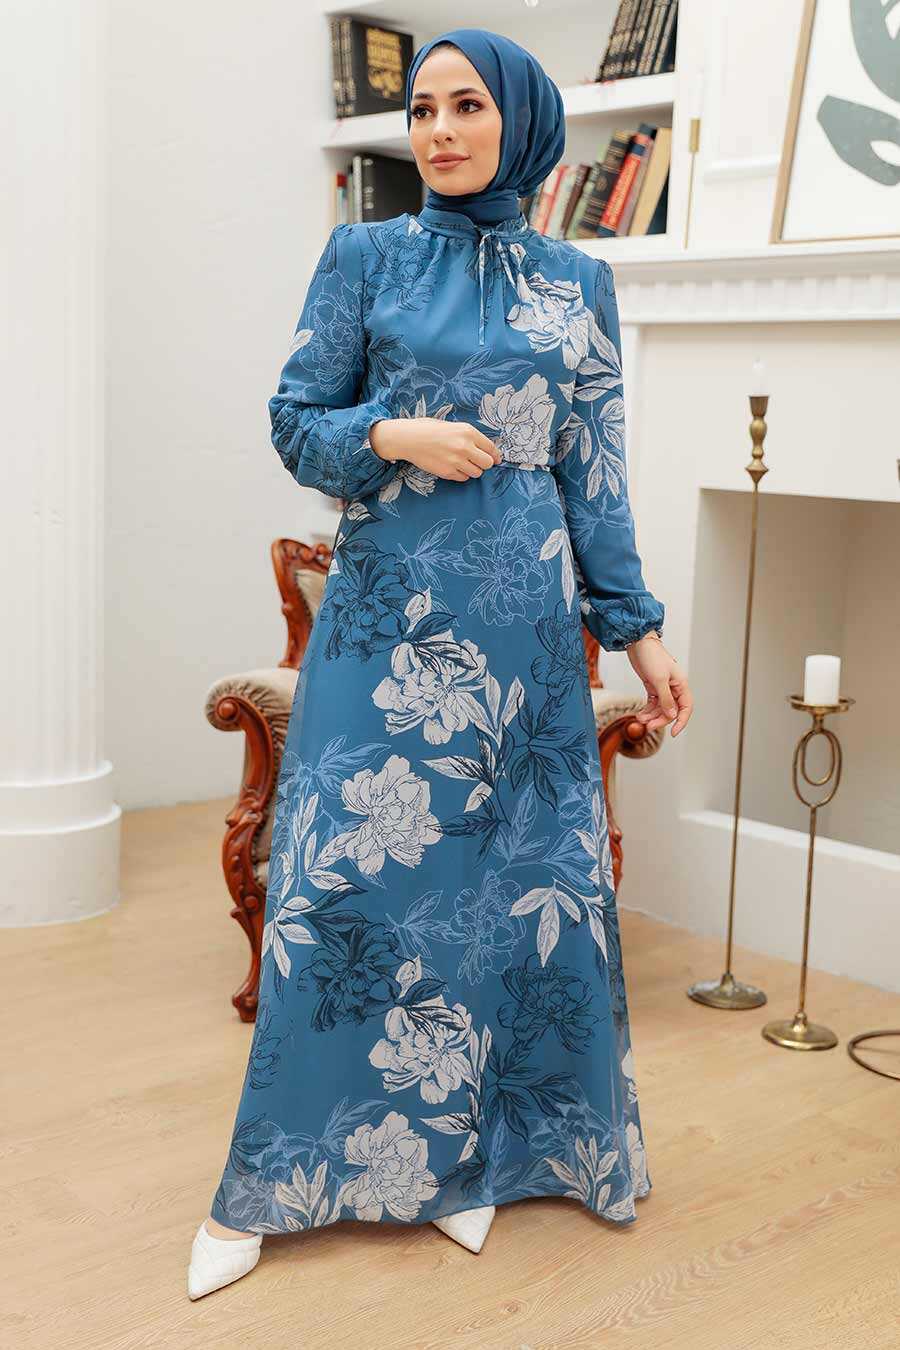 İndigo Blue Hijab Dress 10079IM 